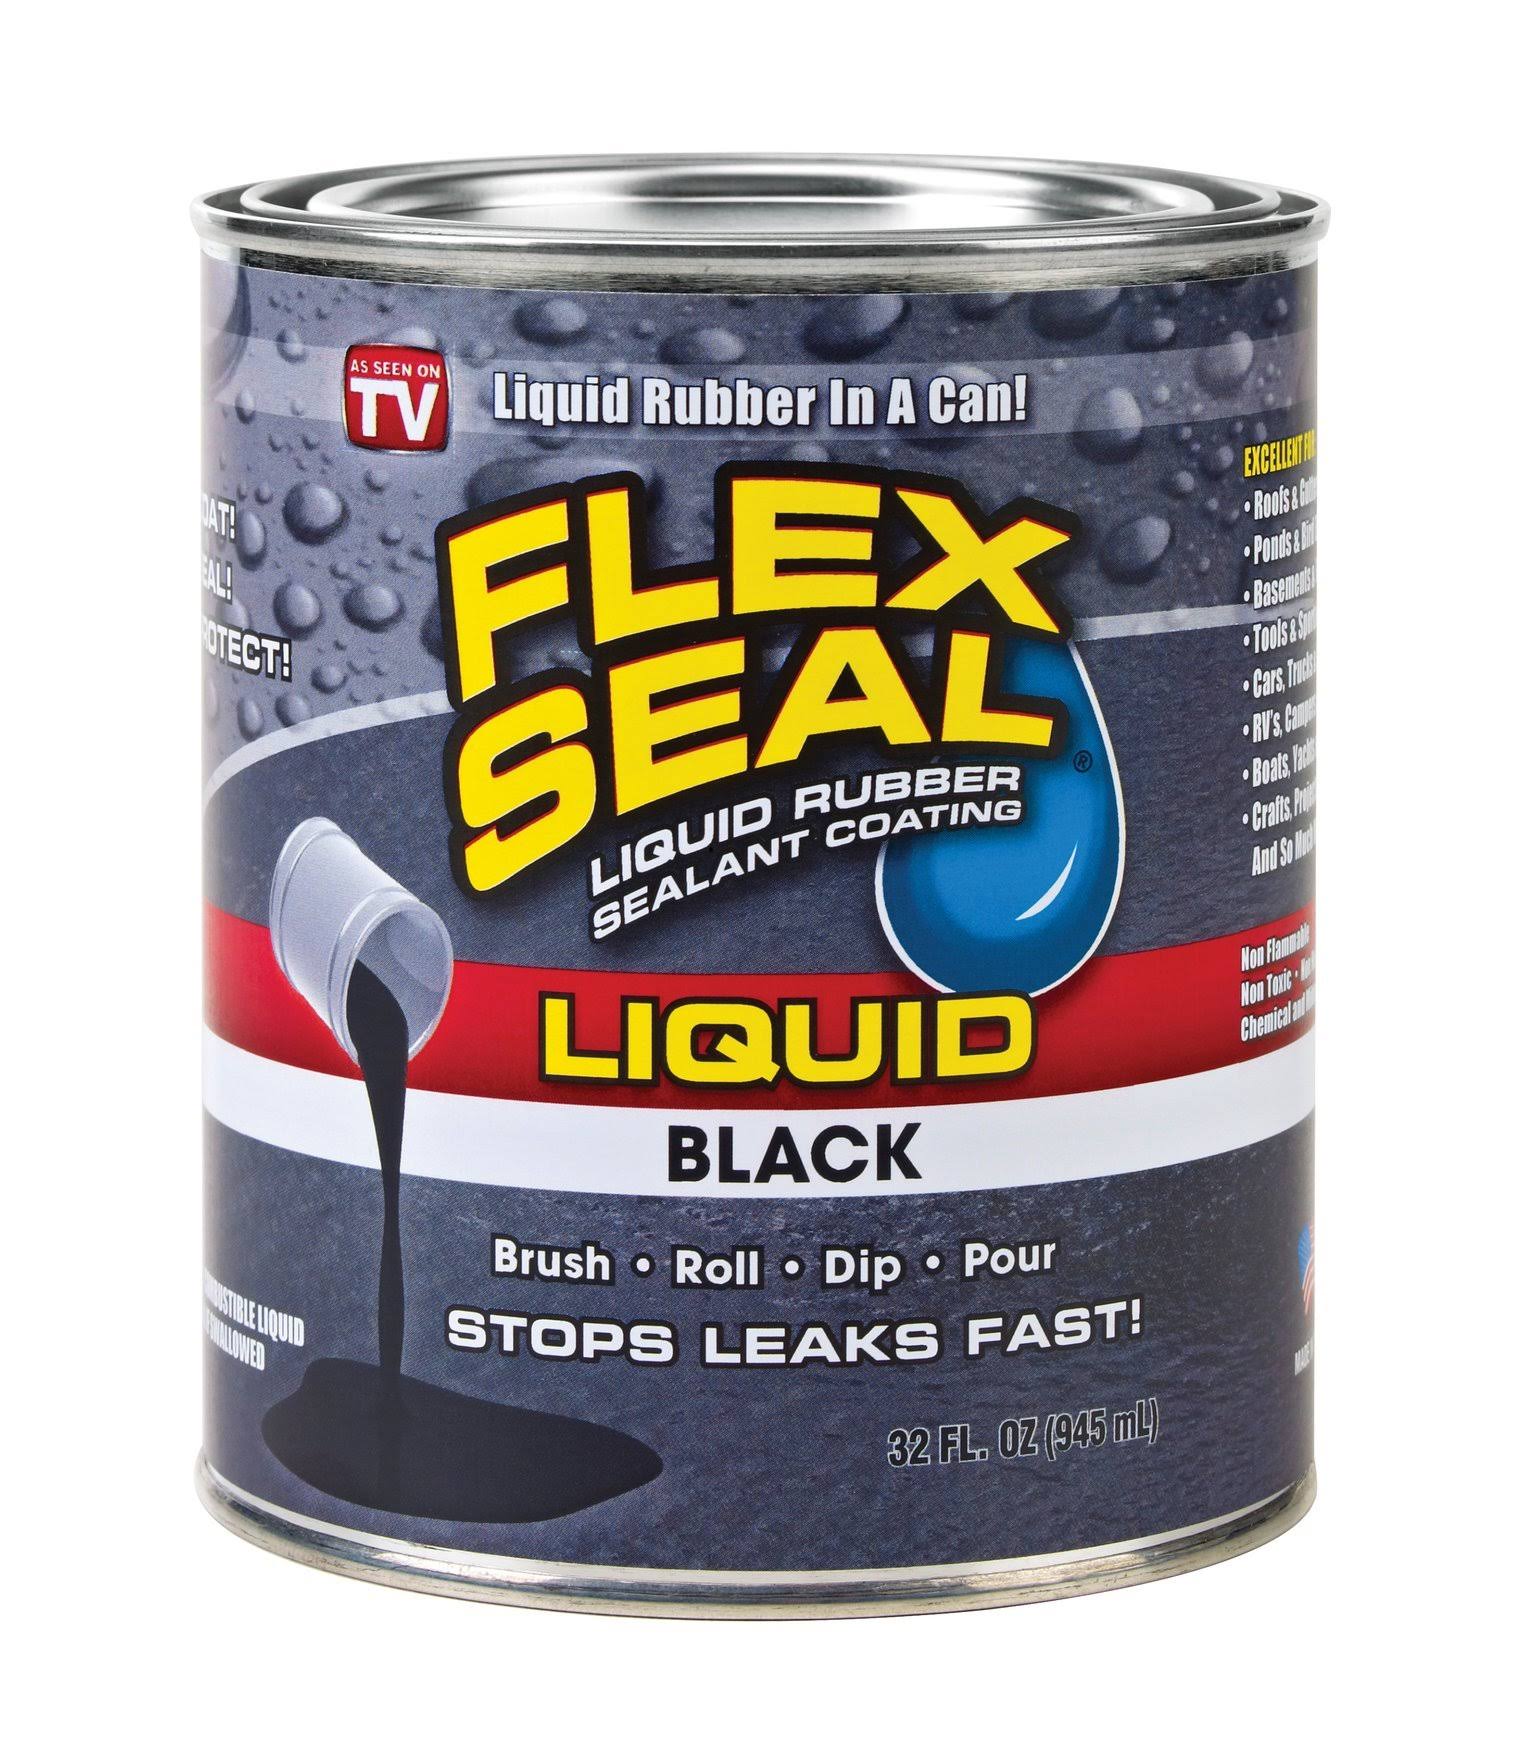 Swift Response Flex Seal Liquid Rubber Sealant - Black, 32oz